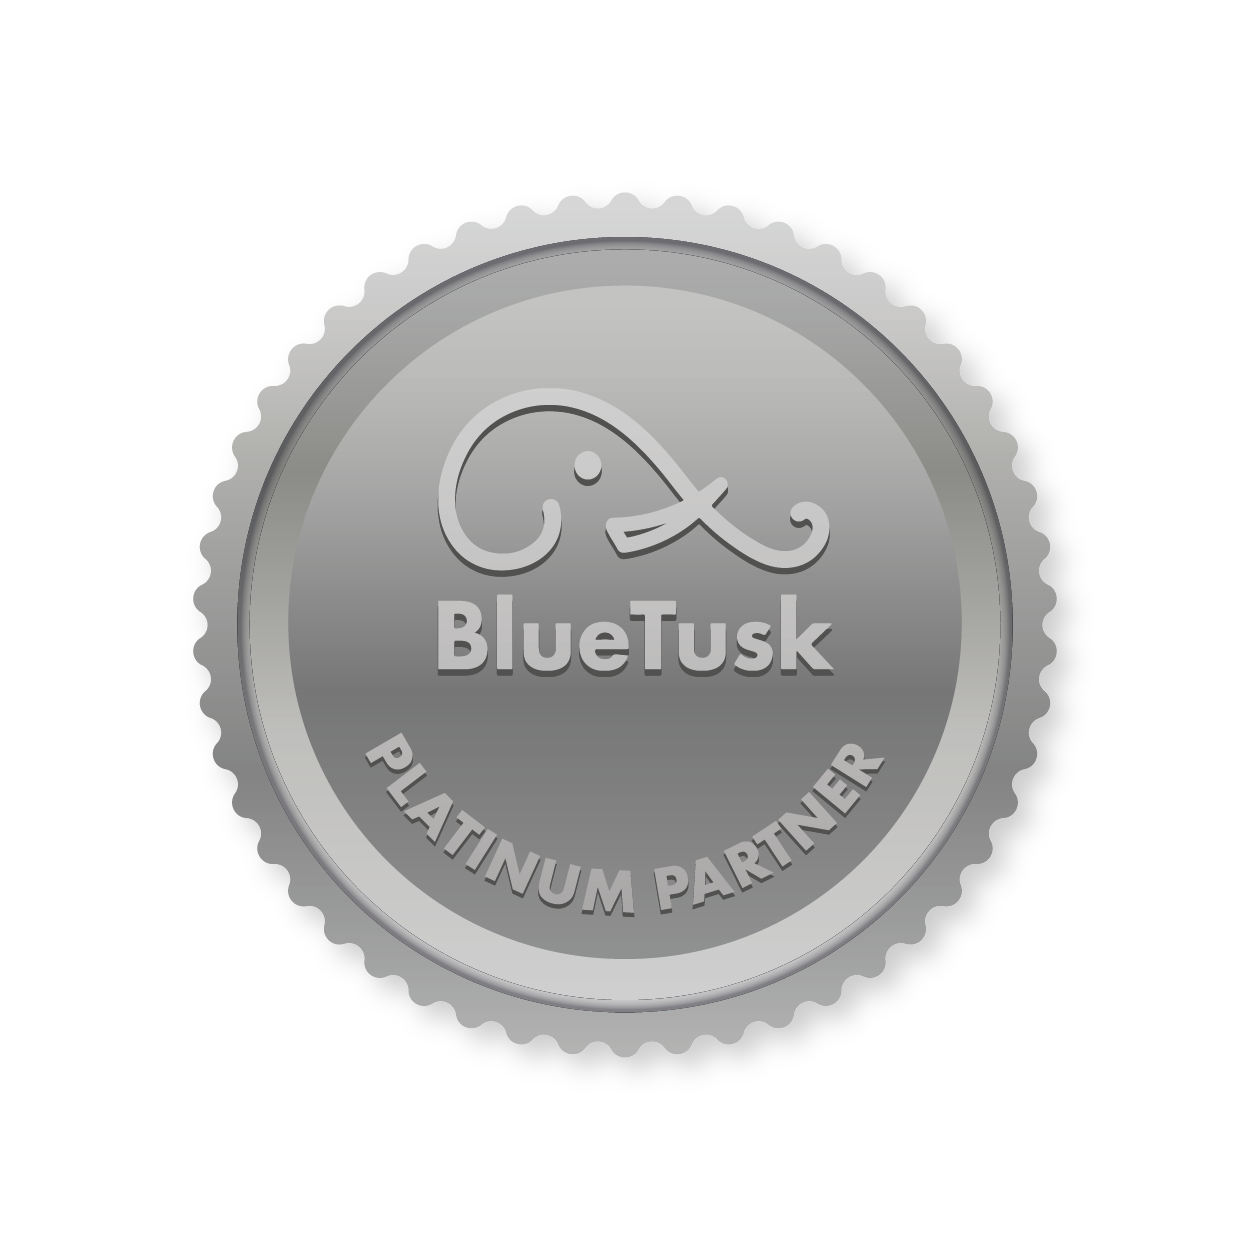 BlueTusk Platinum Partner Package